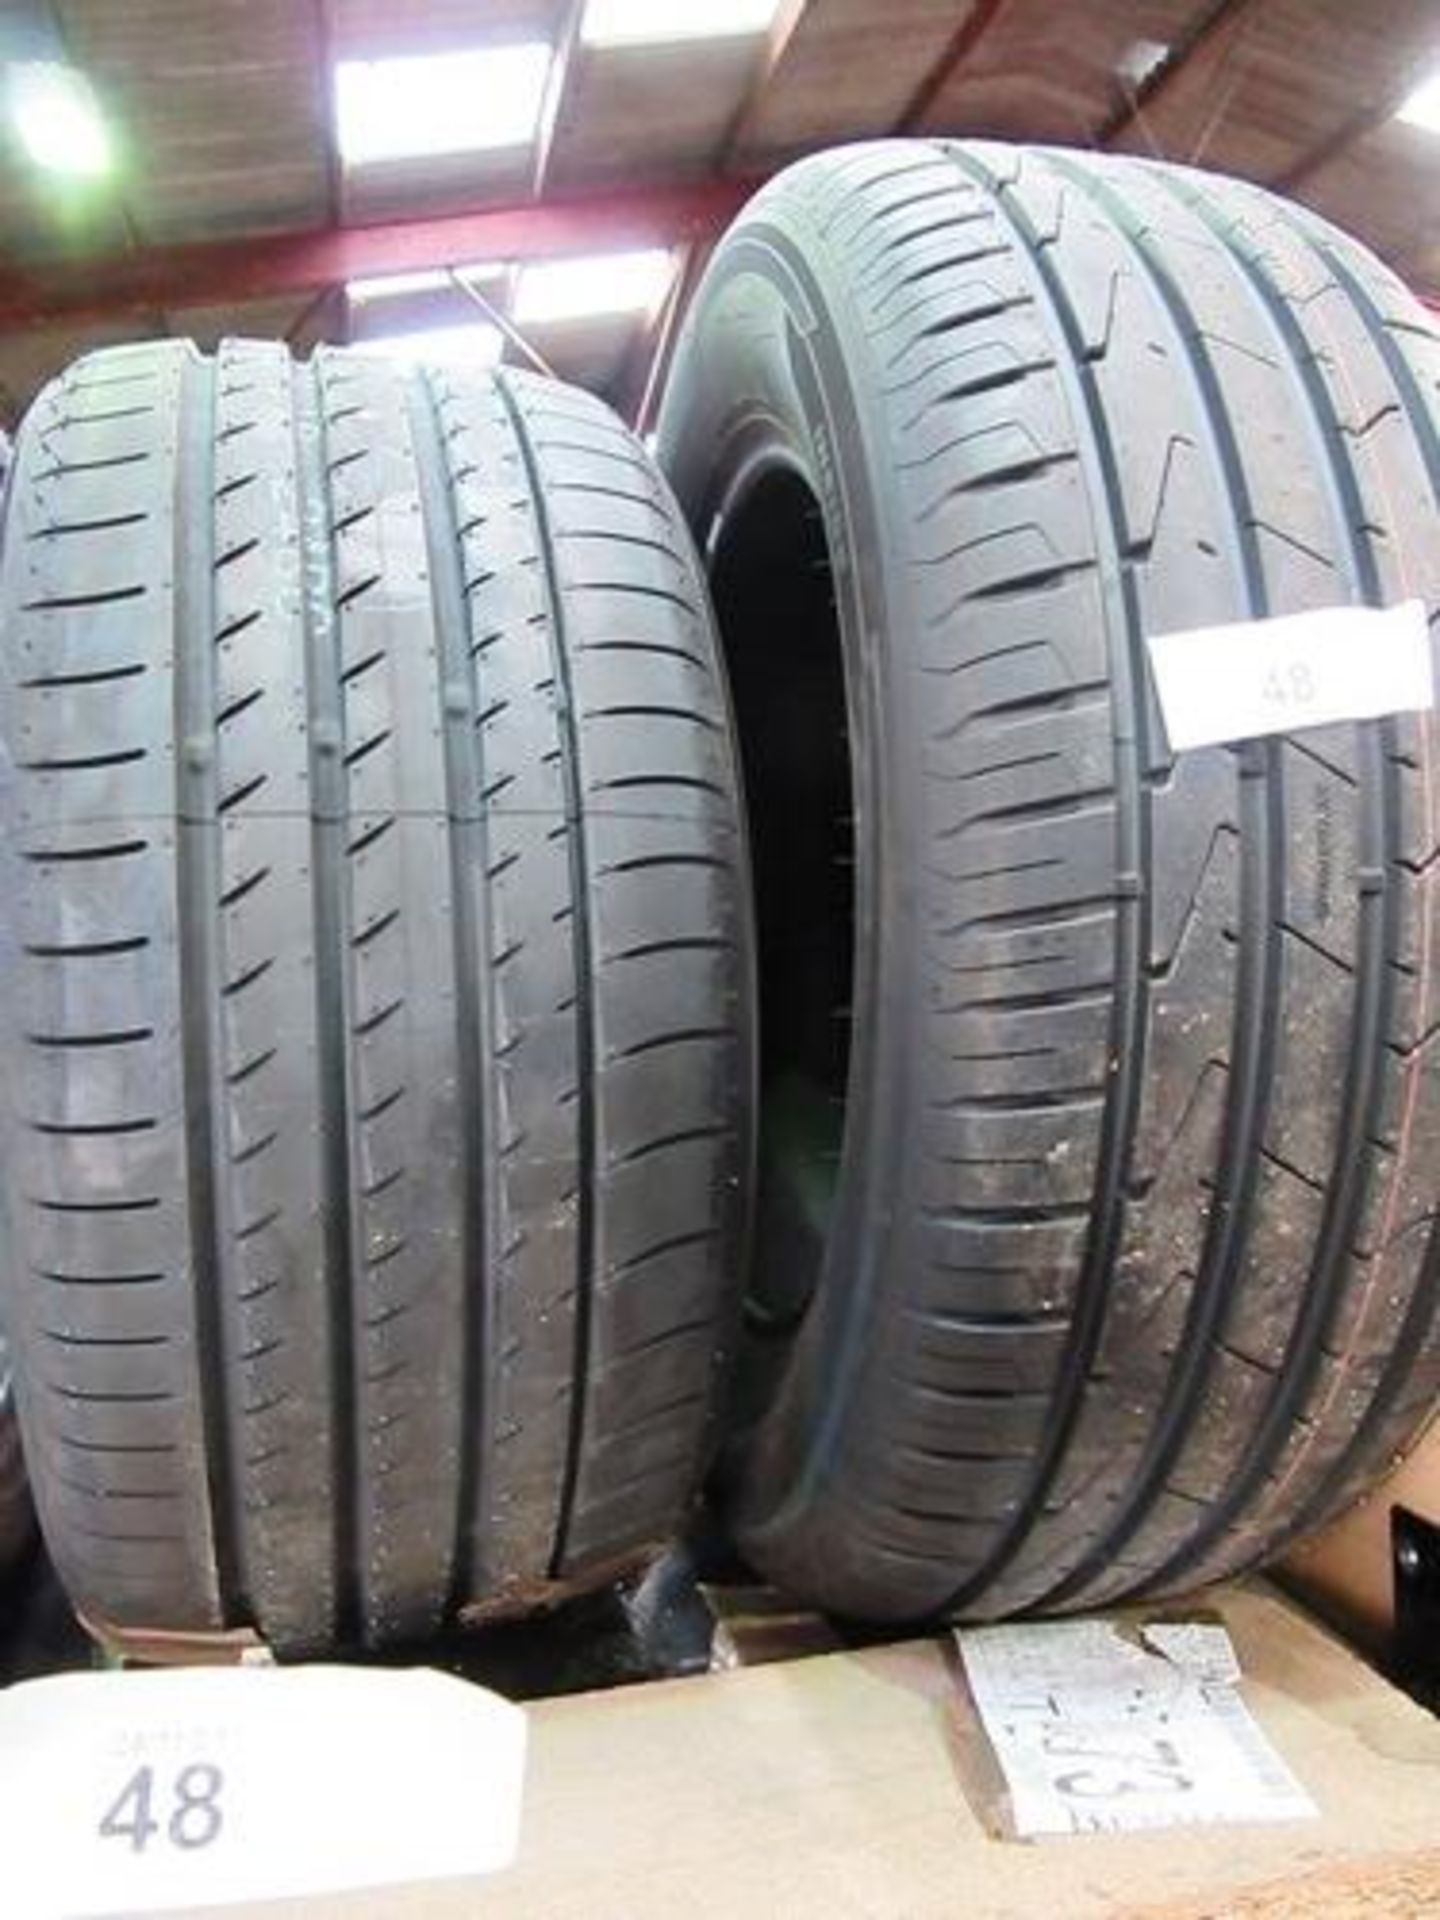 1 x Hankook Ventus Prime 3 tyre, size 235/60R17, new with label and 1 x Yokohama Advan Sport V105